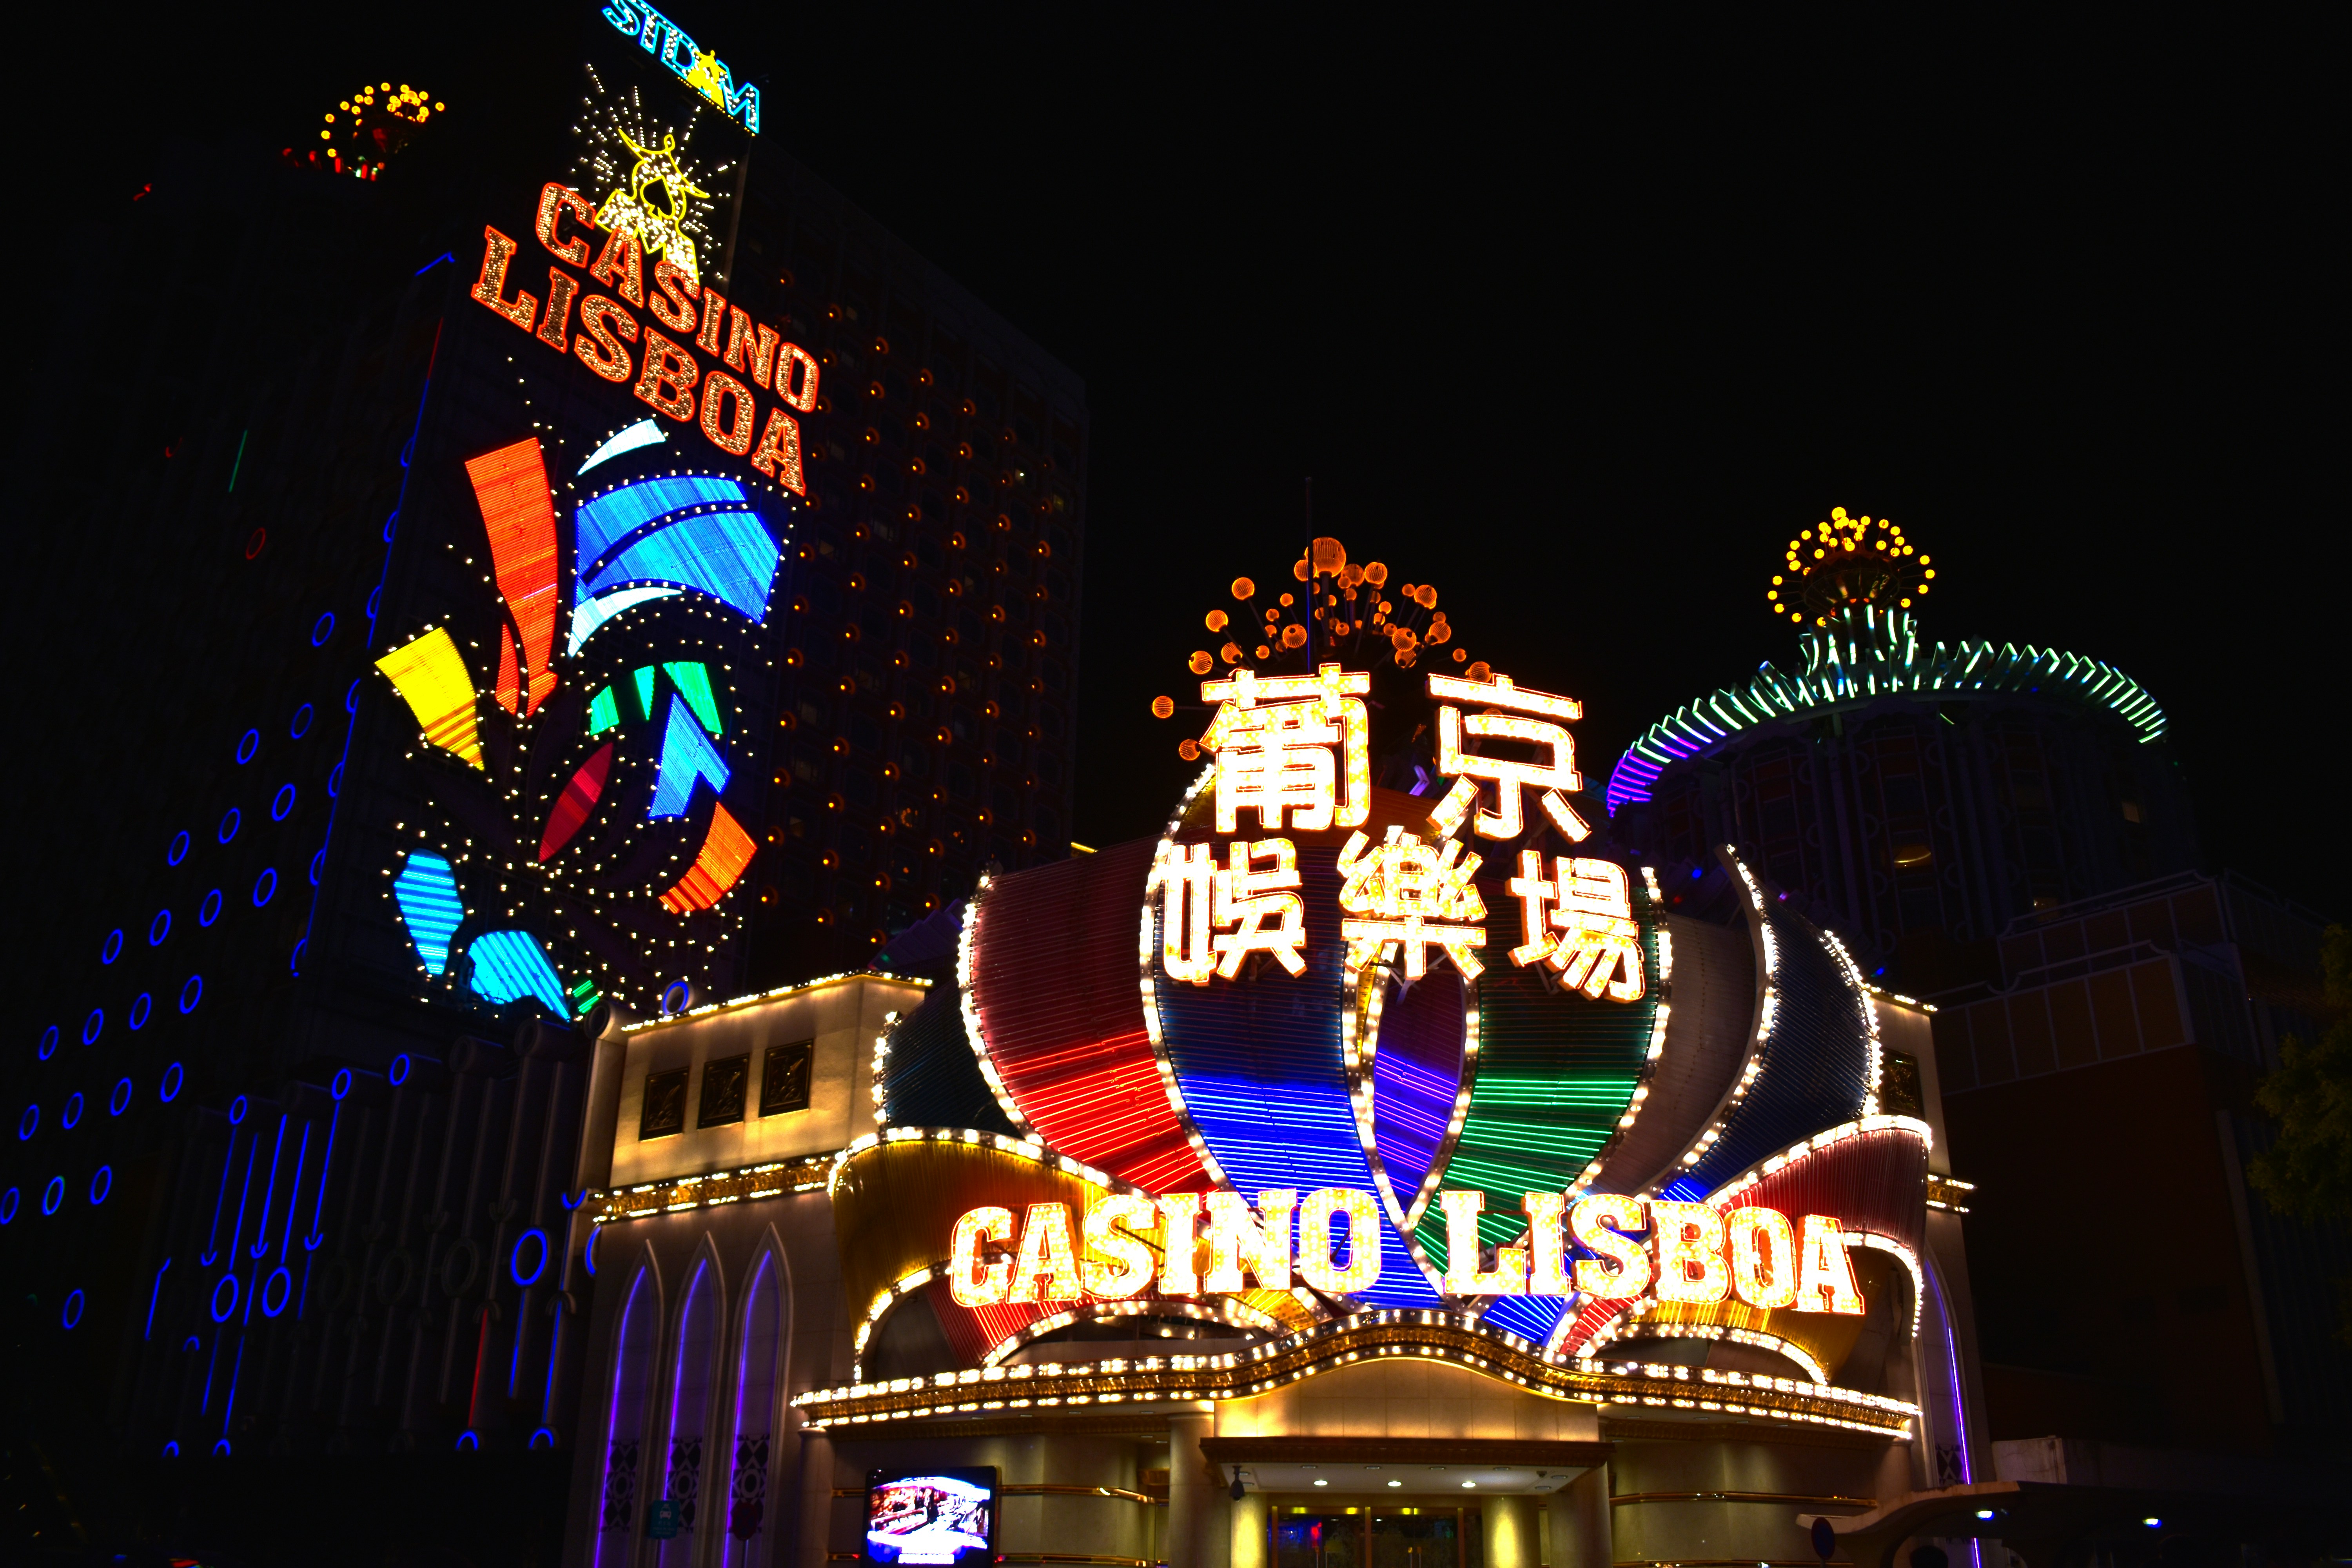 billionaire casino oyun hilesi